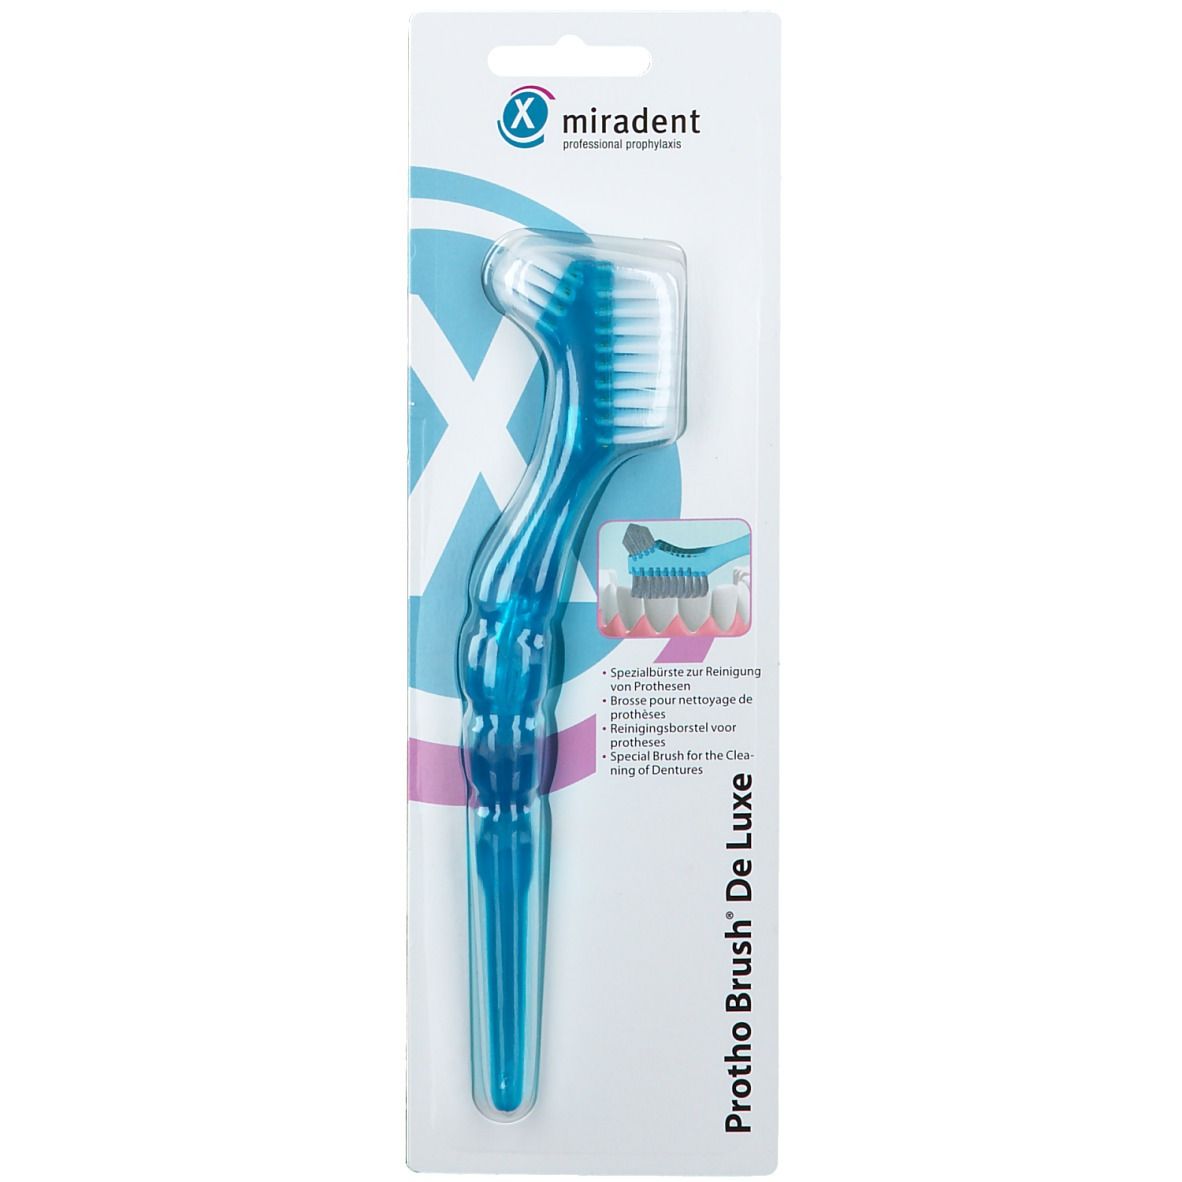 miradent Protho Brush® De Luxe blau